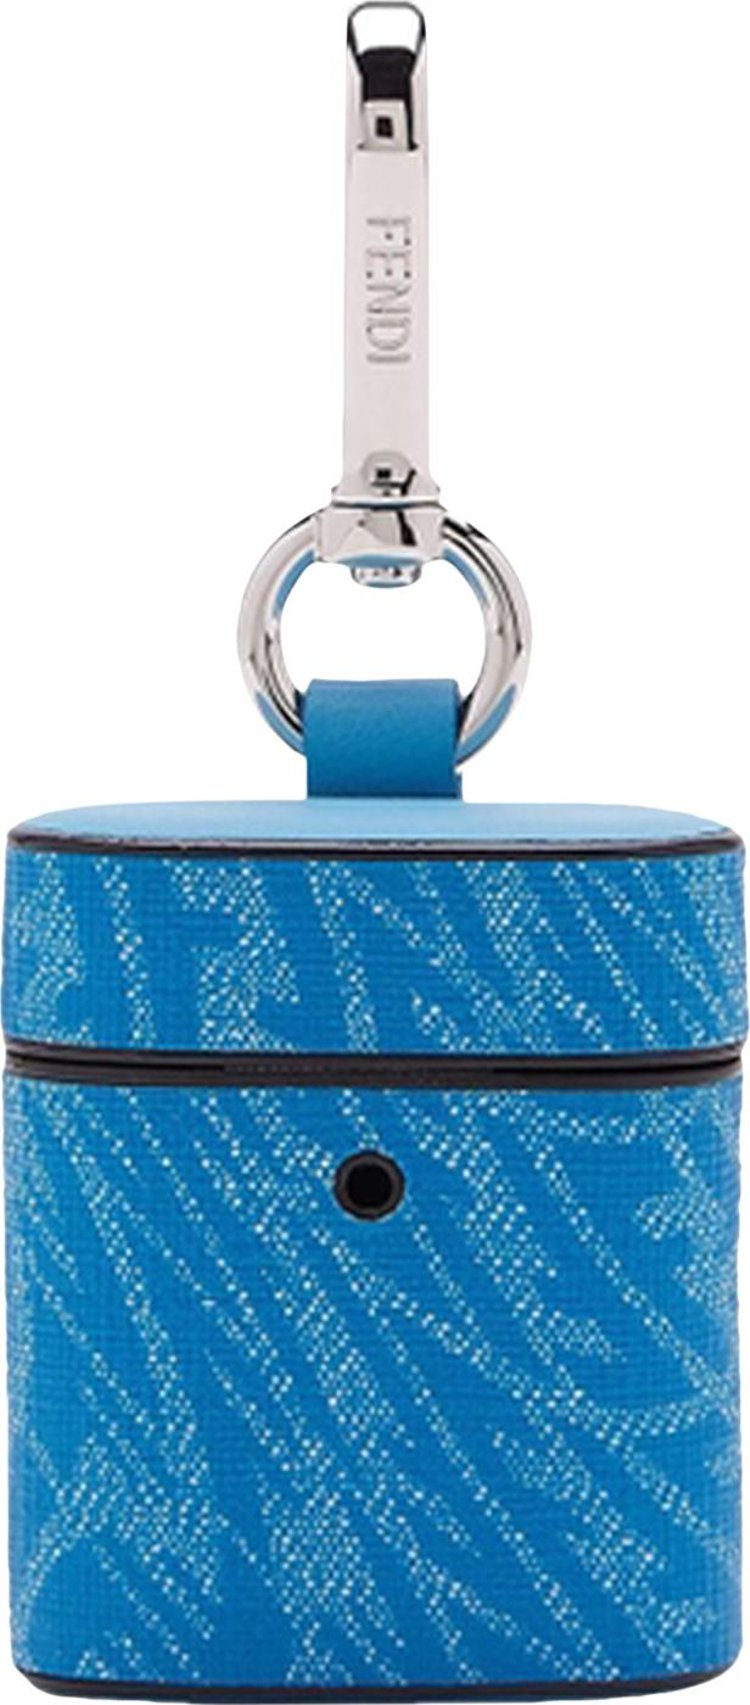 Fendi Logo Airpod Case 'Blue'